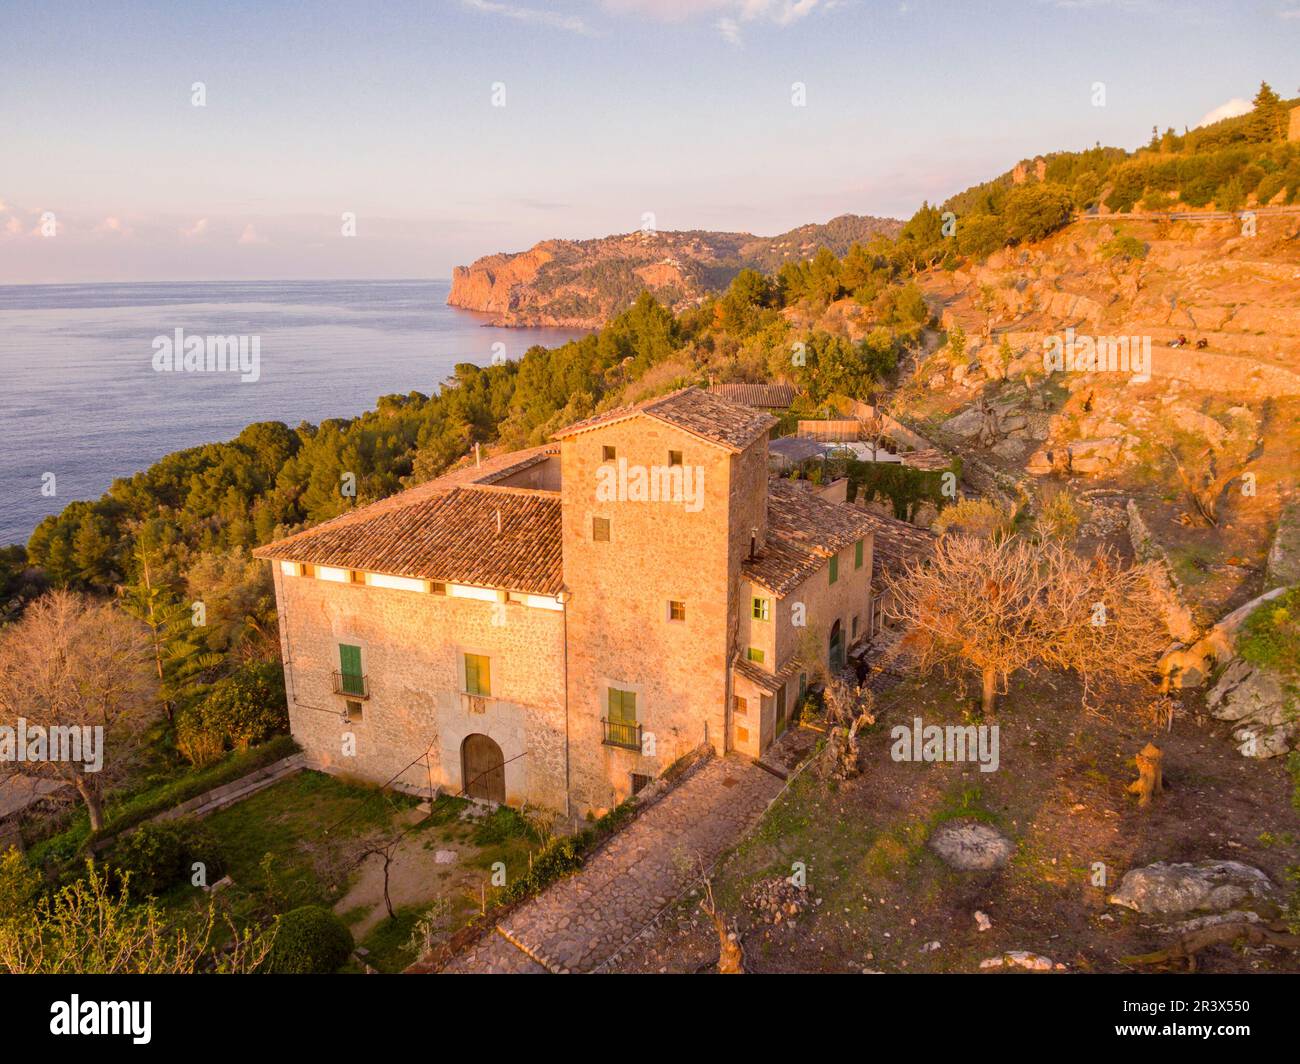 La casa dAmunt, Llucalcari, Deià, comarca de la Sierra de Tramontana, Mallorca, balearic islands, Spain. Stock Photo